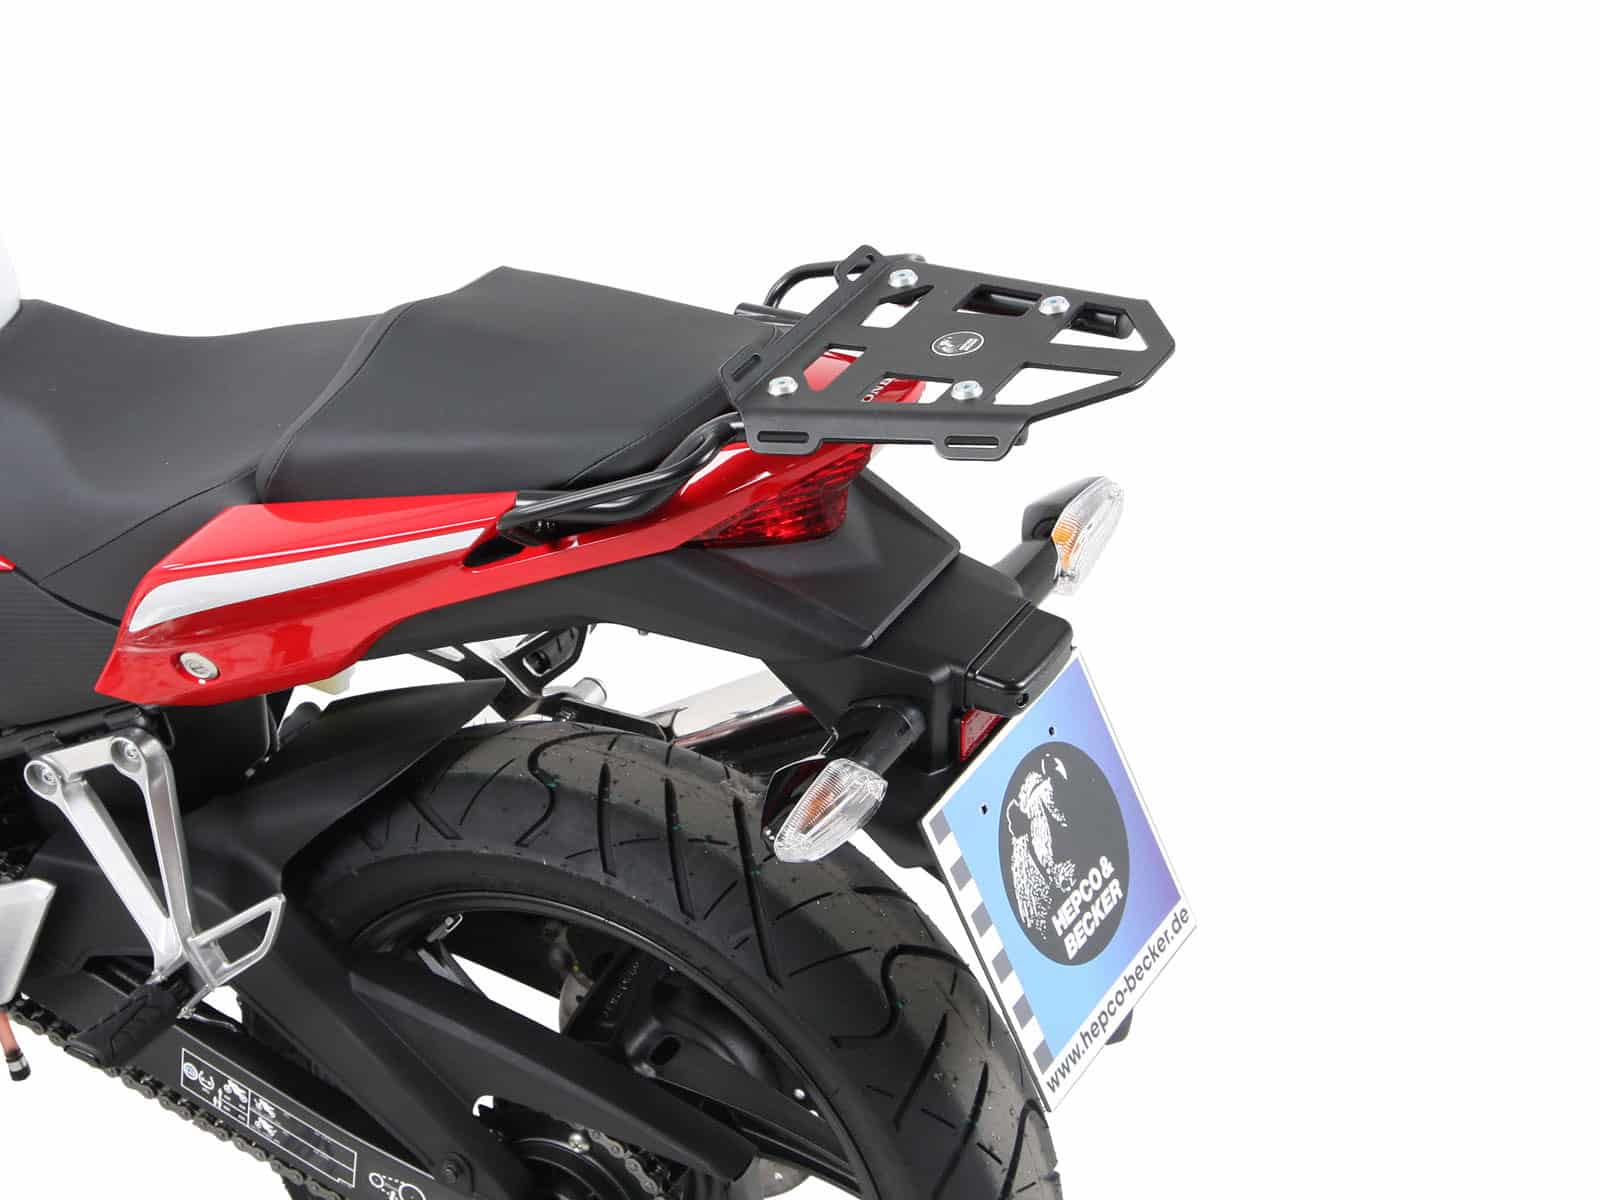 Minirack soft luggage rear rack for Honda CBR 300 R (2014-)